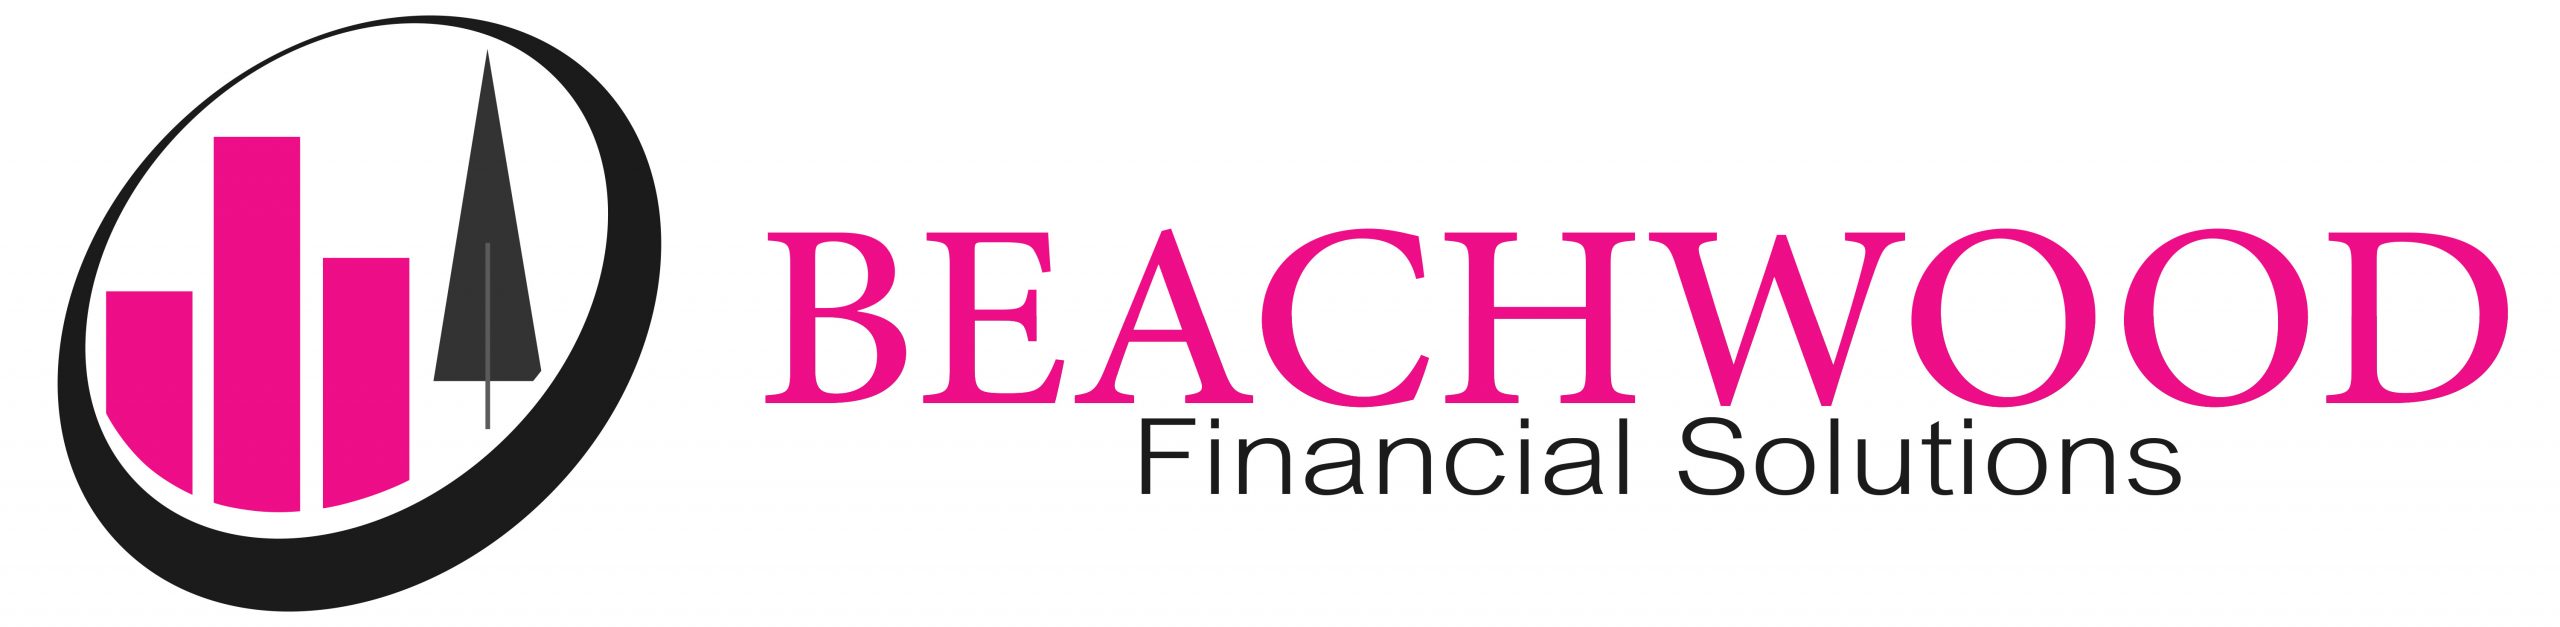 Beachwood Financial Solutions